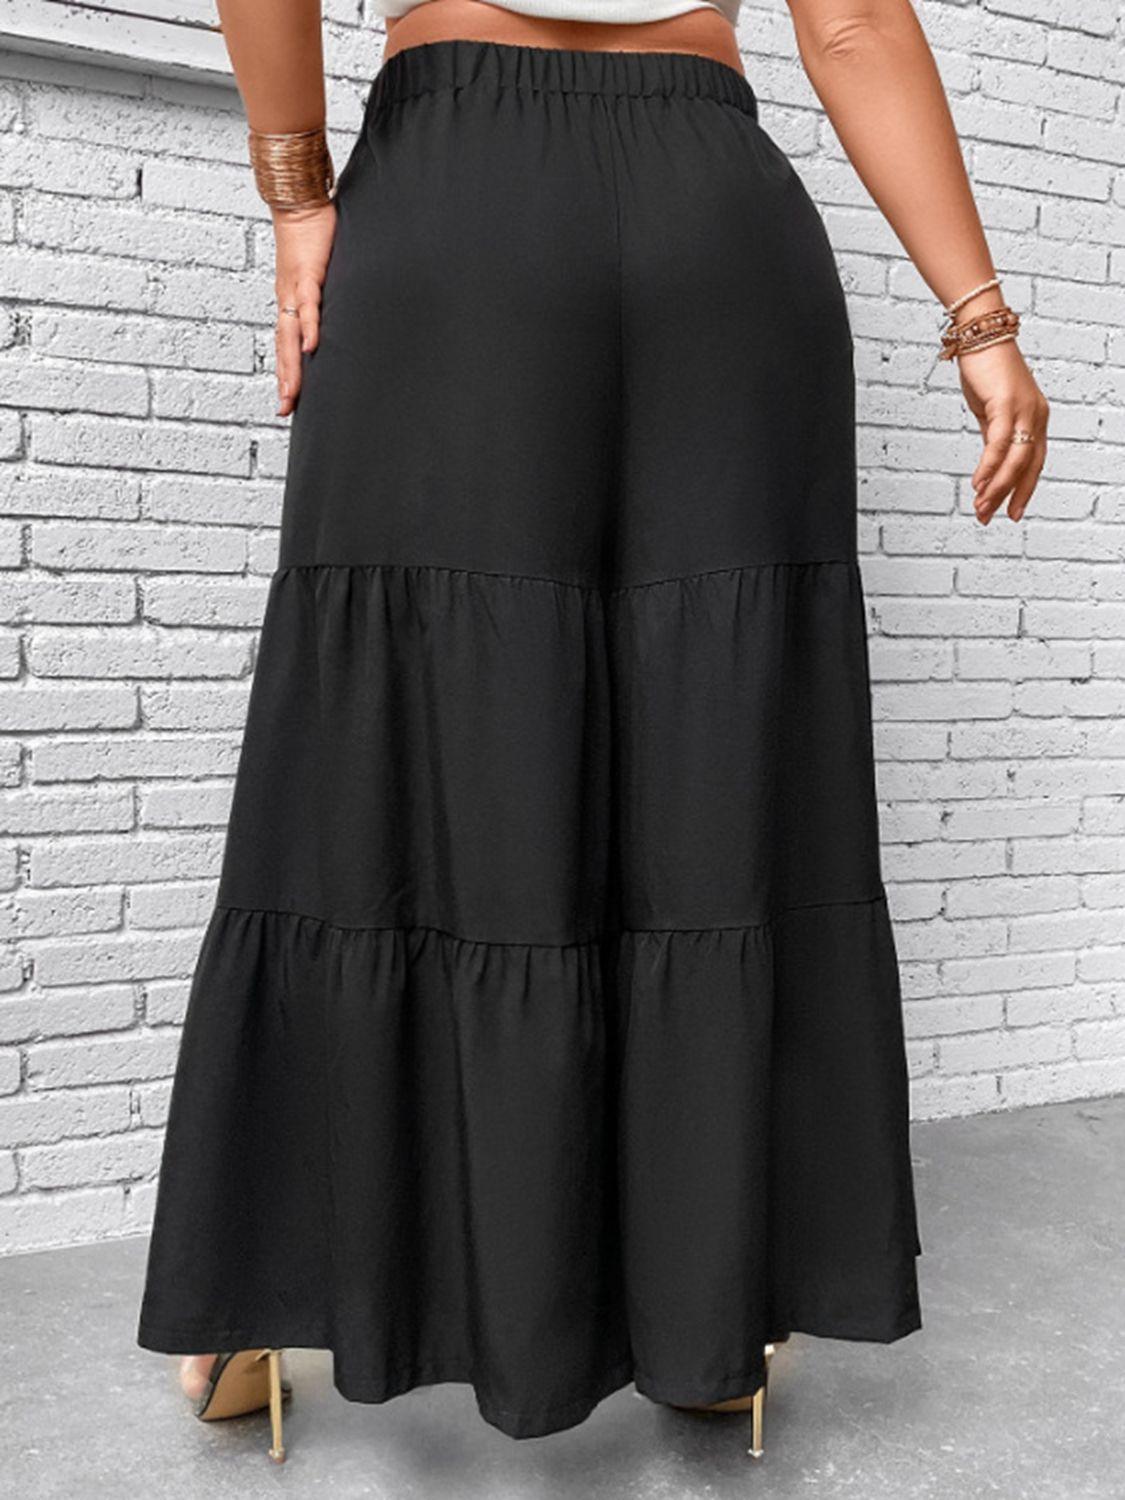 Trendy Black Plus Size Pants: Tiered Fashion & Wide Leg Style for Women